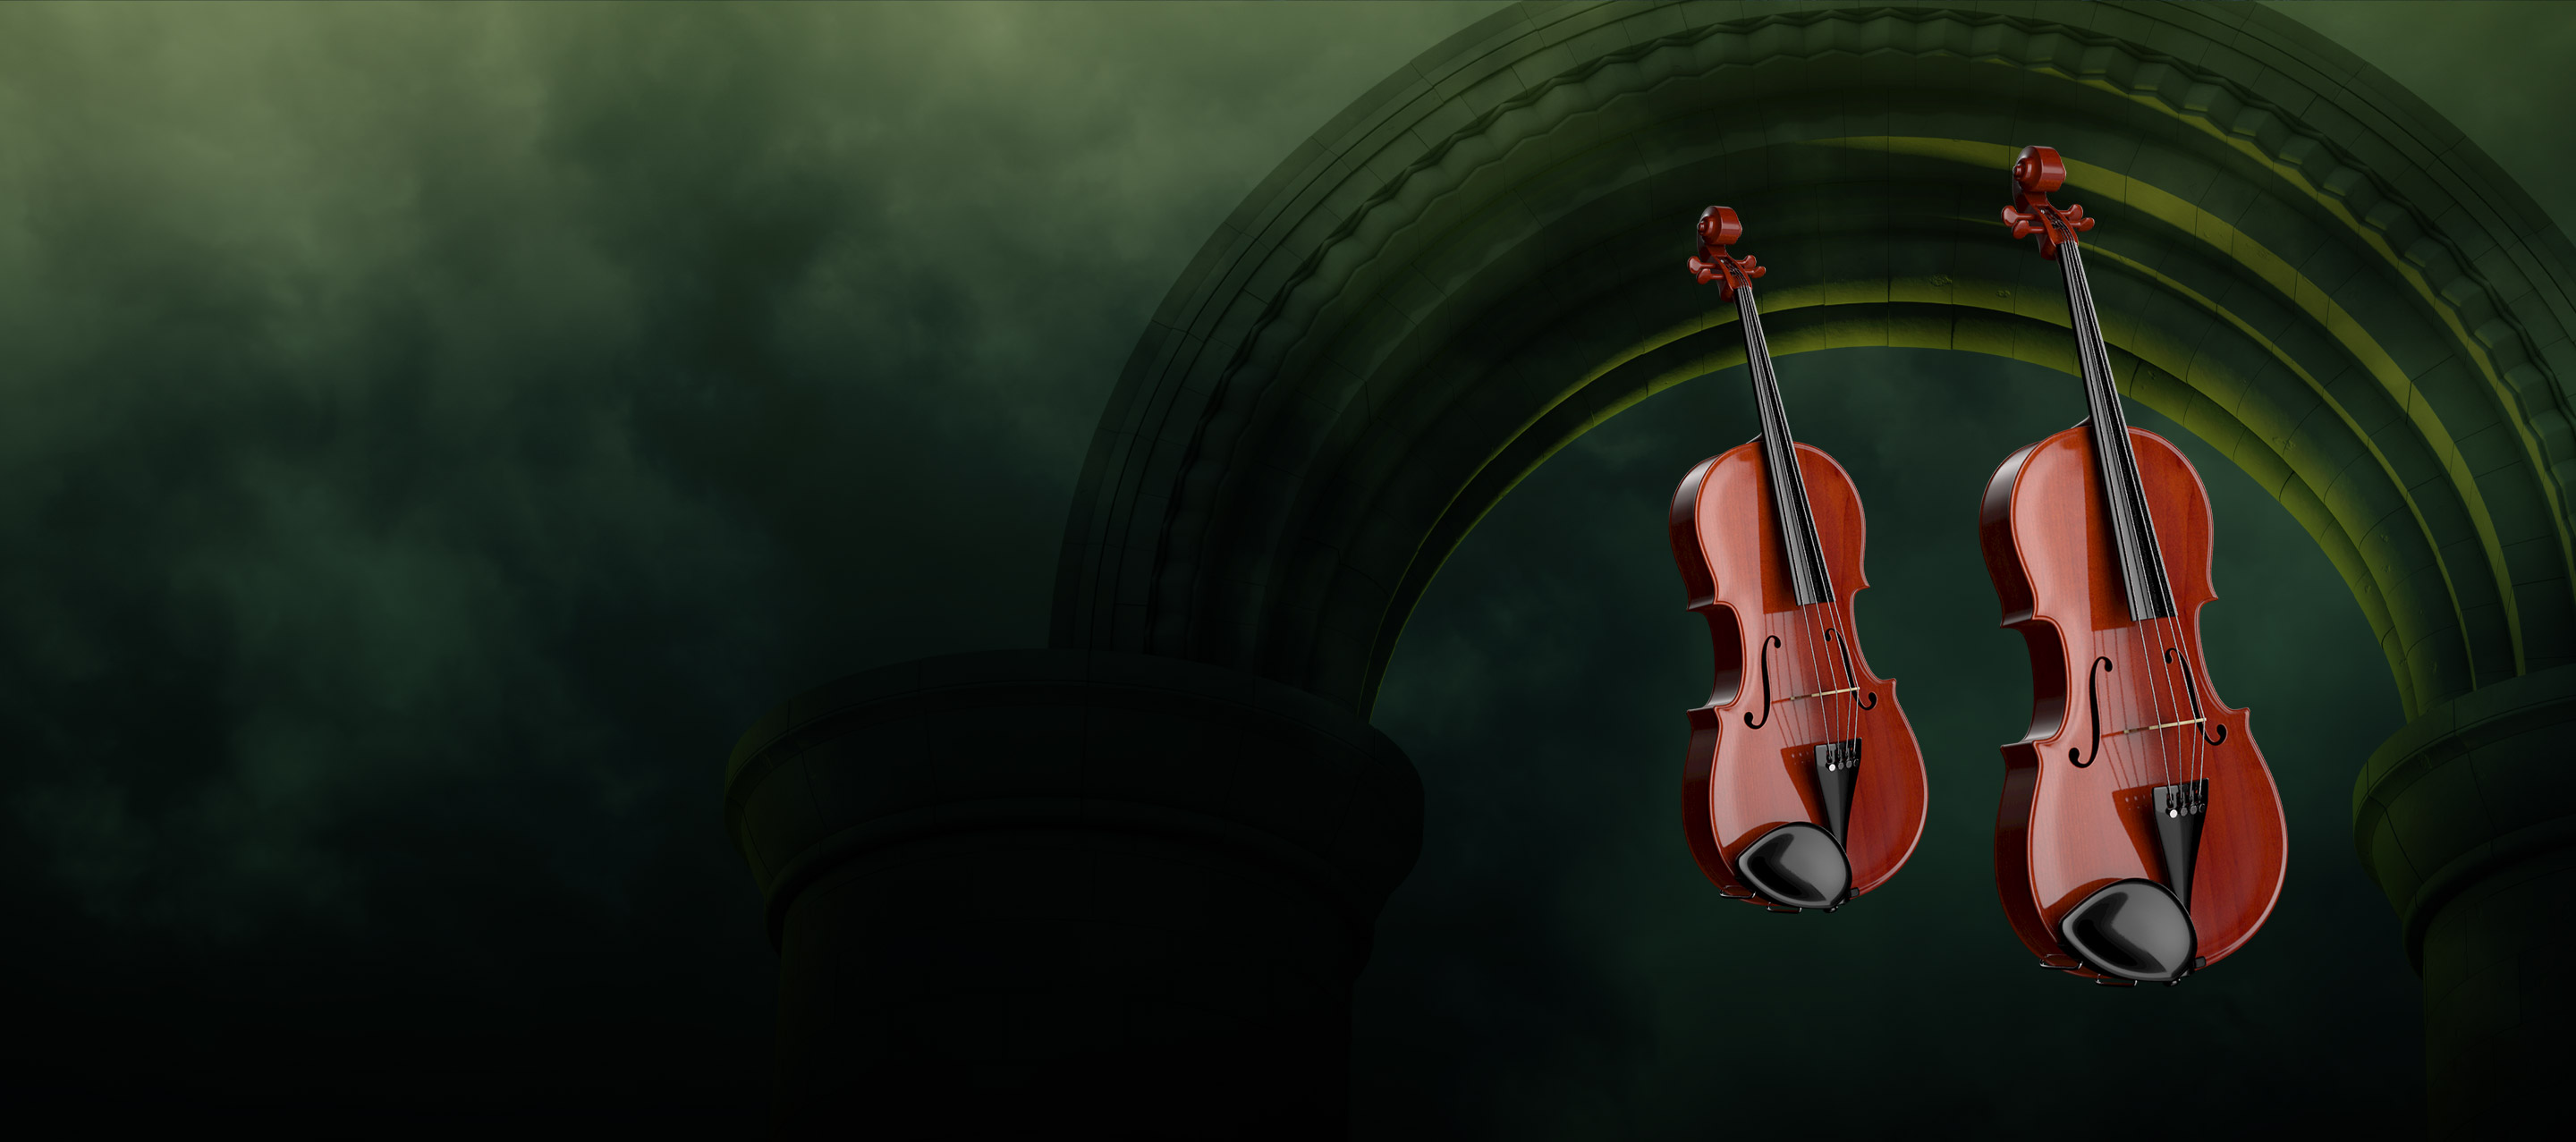 Green Arch - Violins